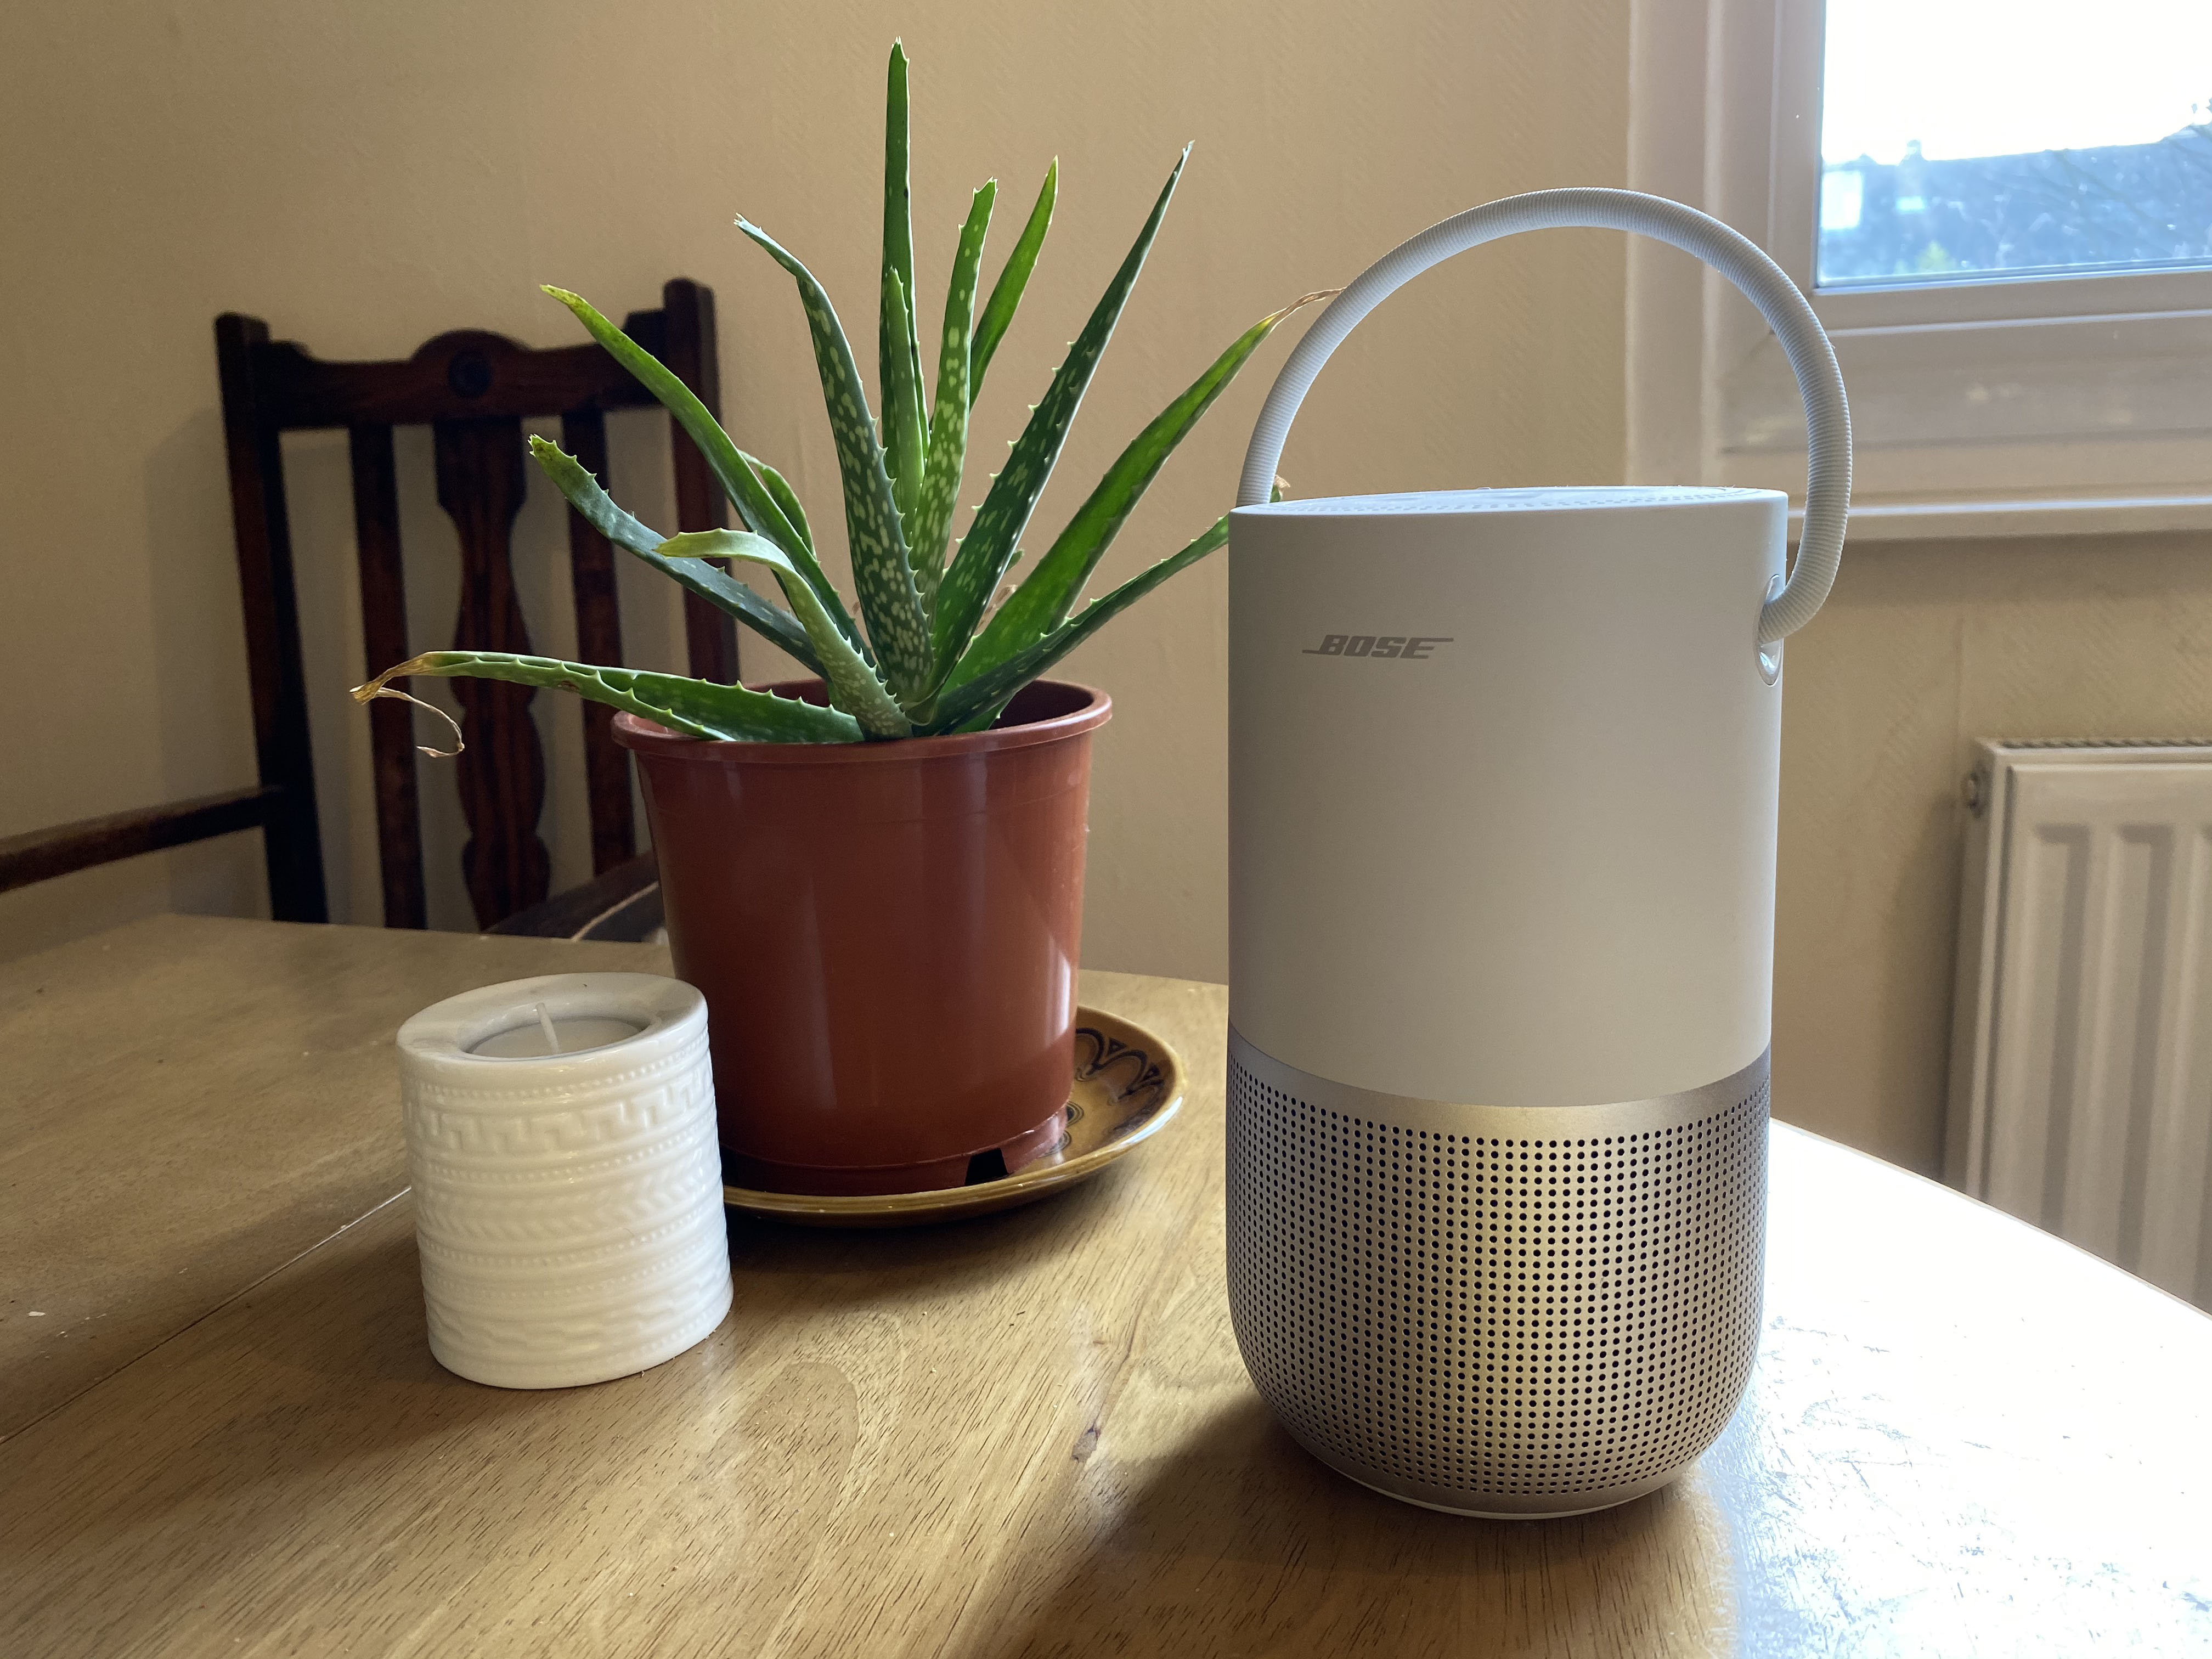 Bose Portable Home Speaker verdict